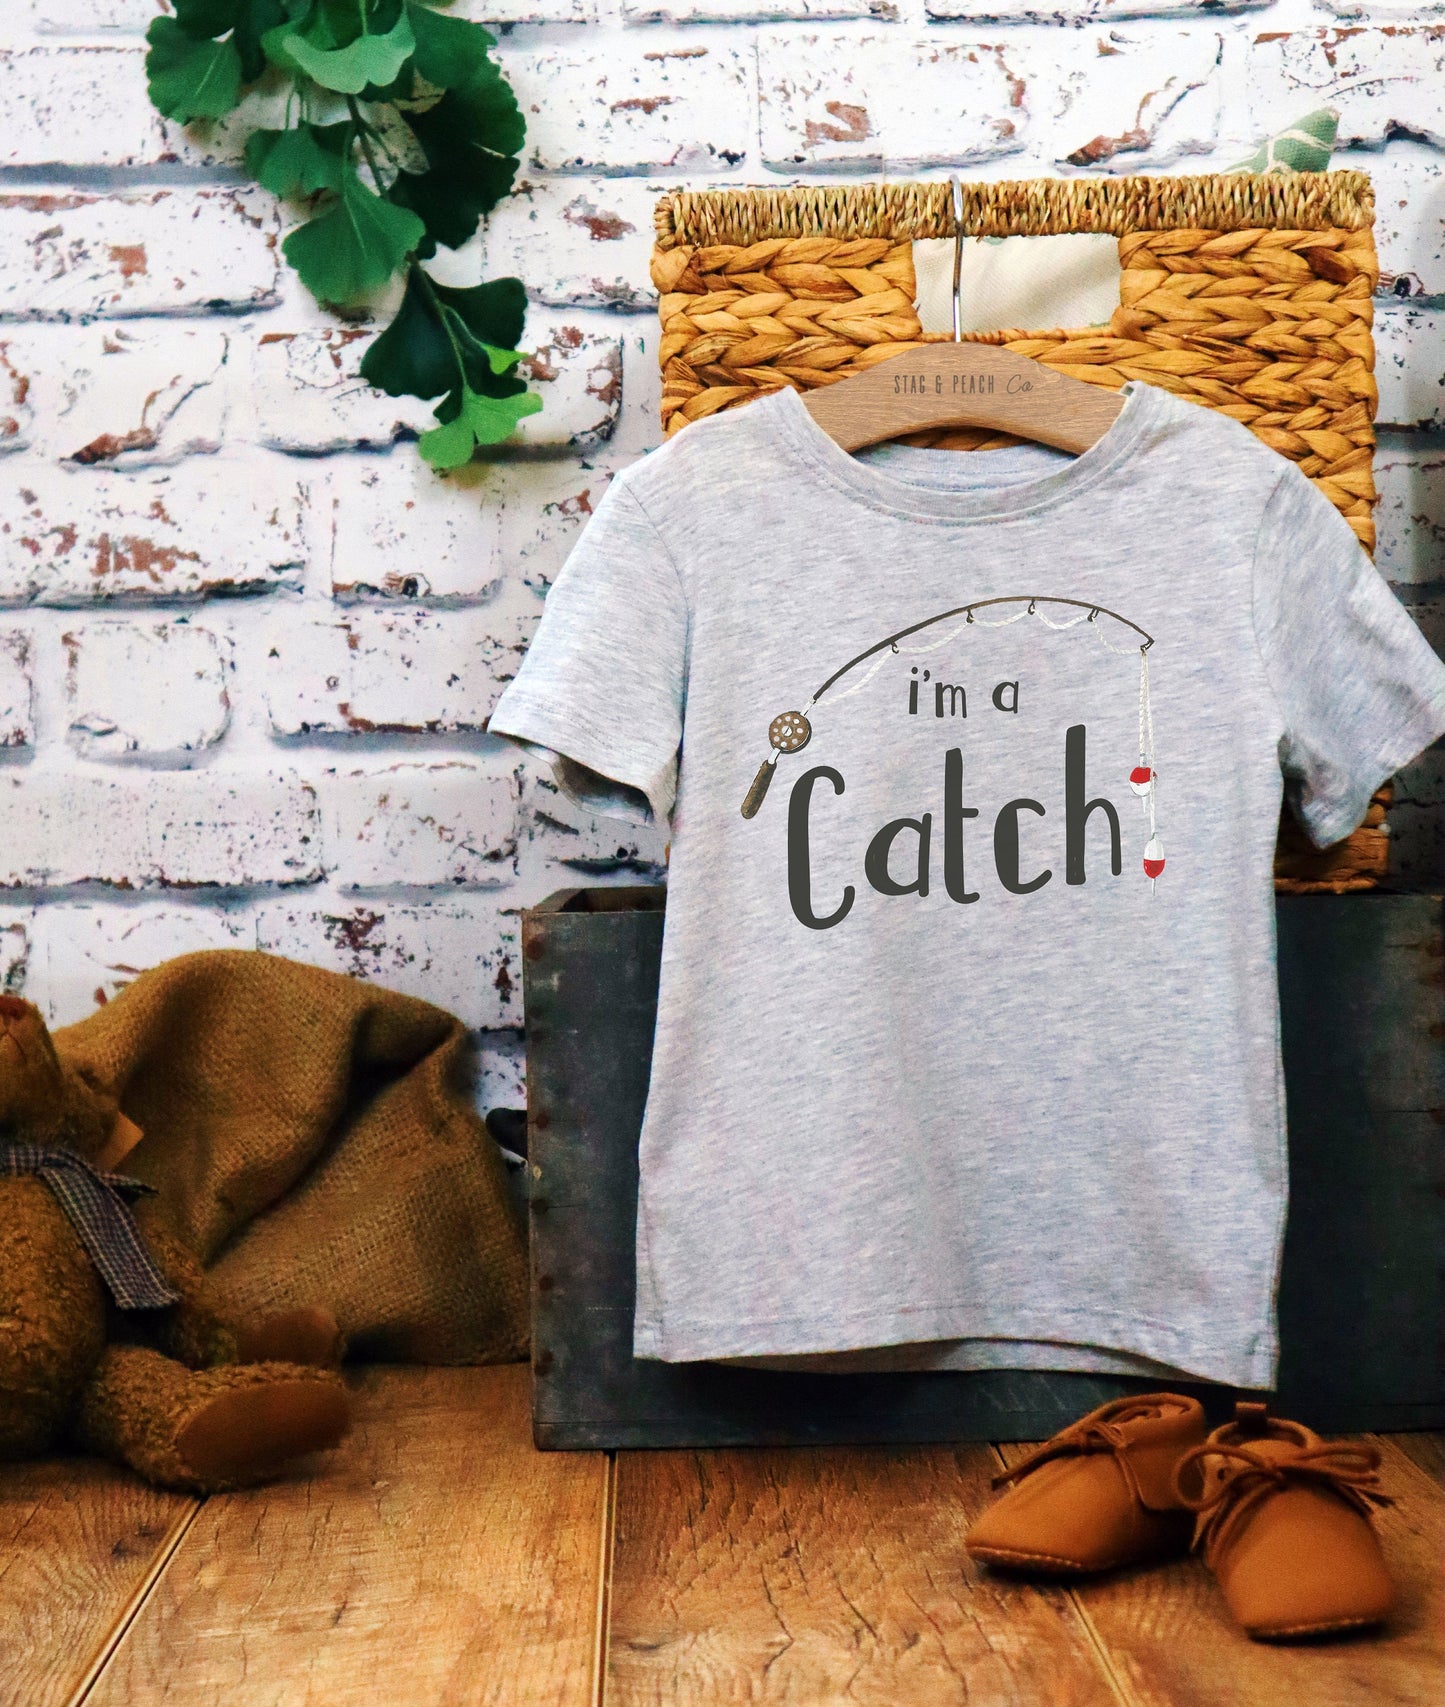 I'm A Catch Kids Shirt - Kids